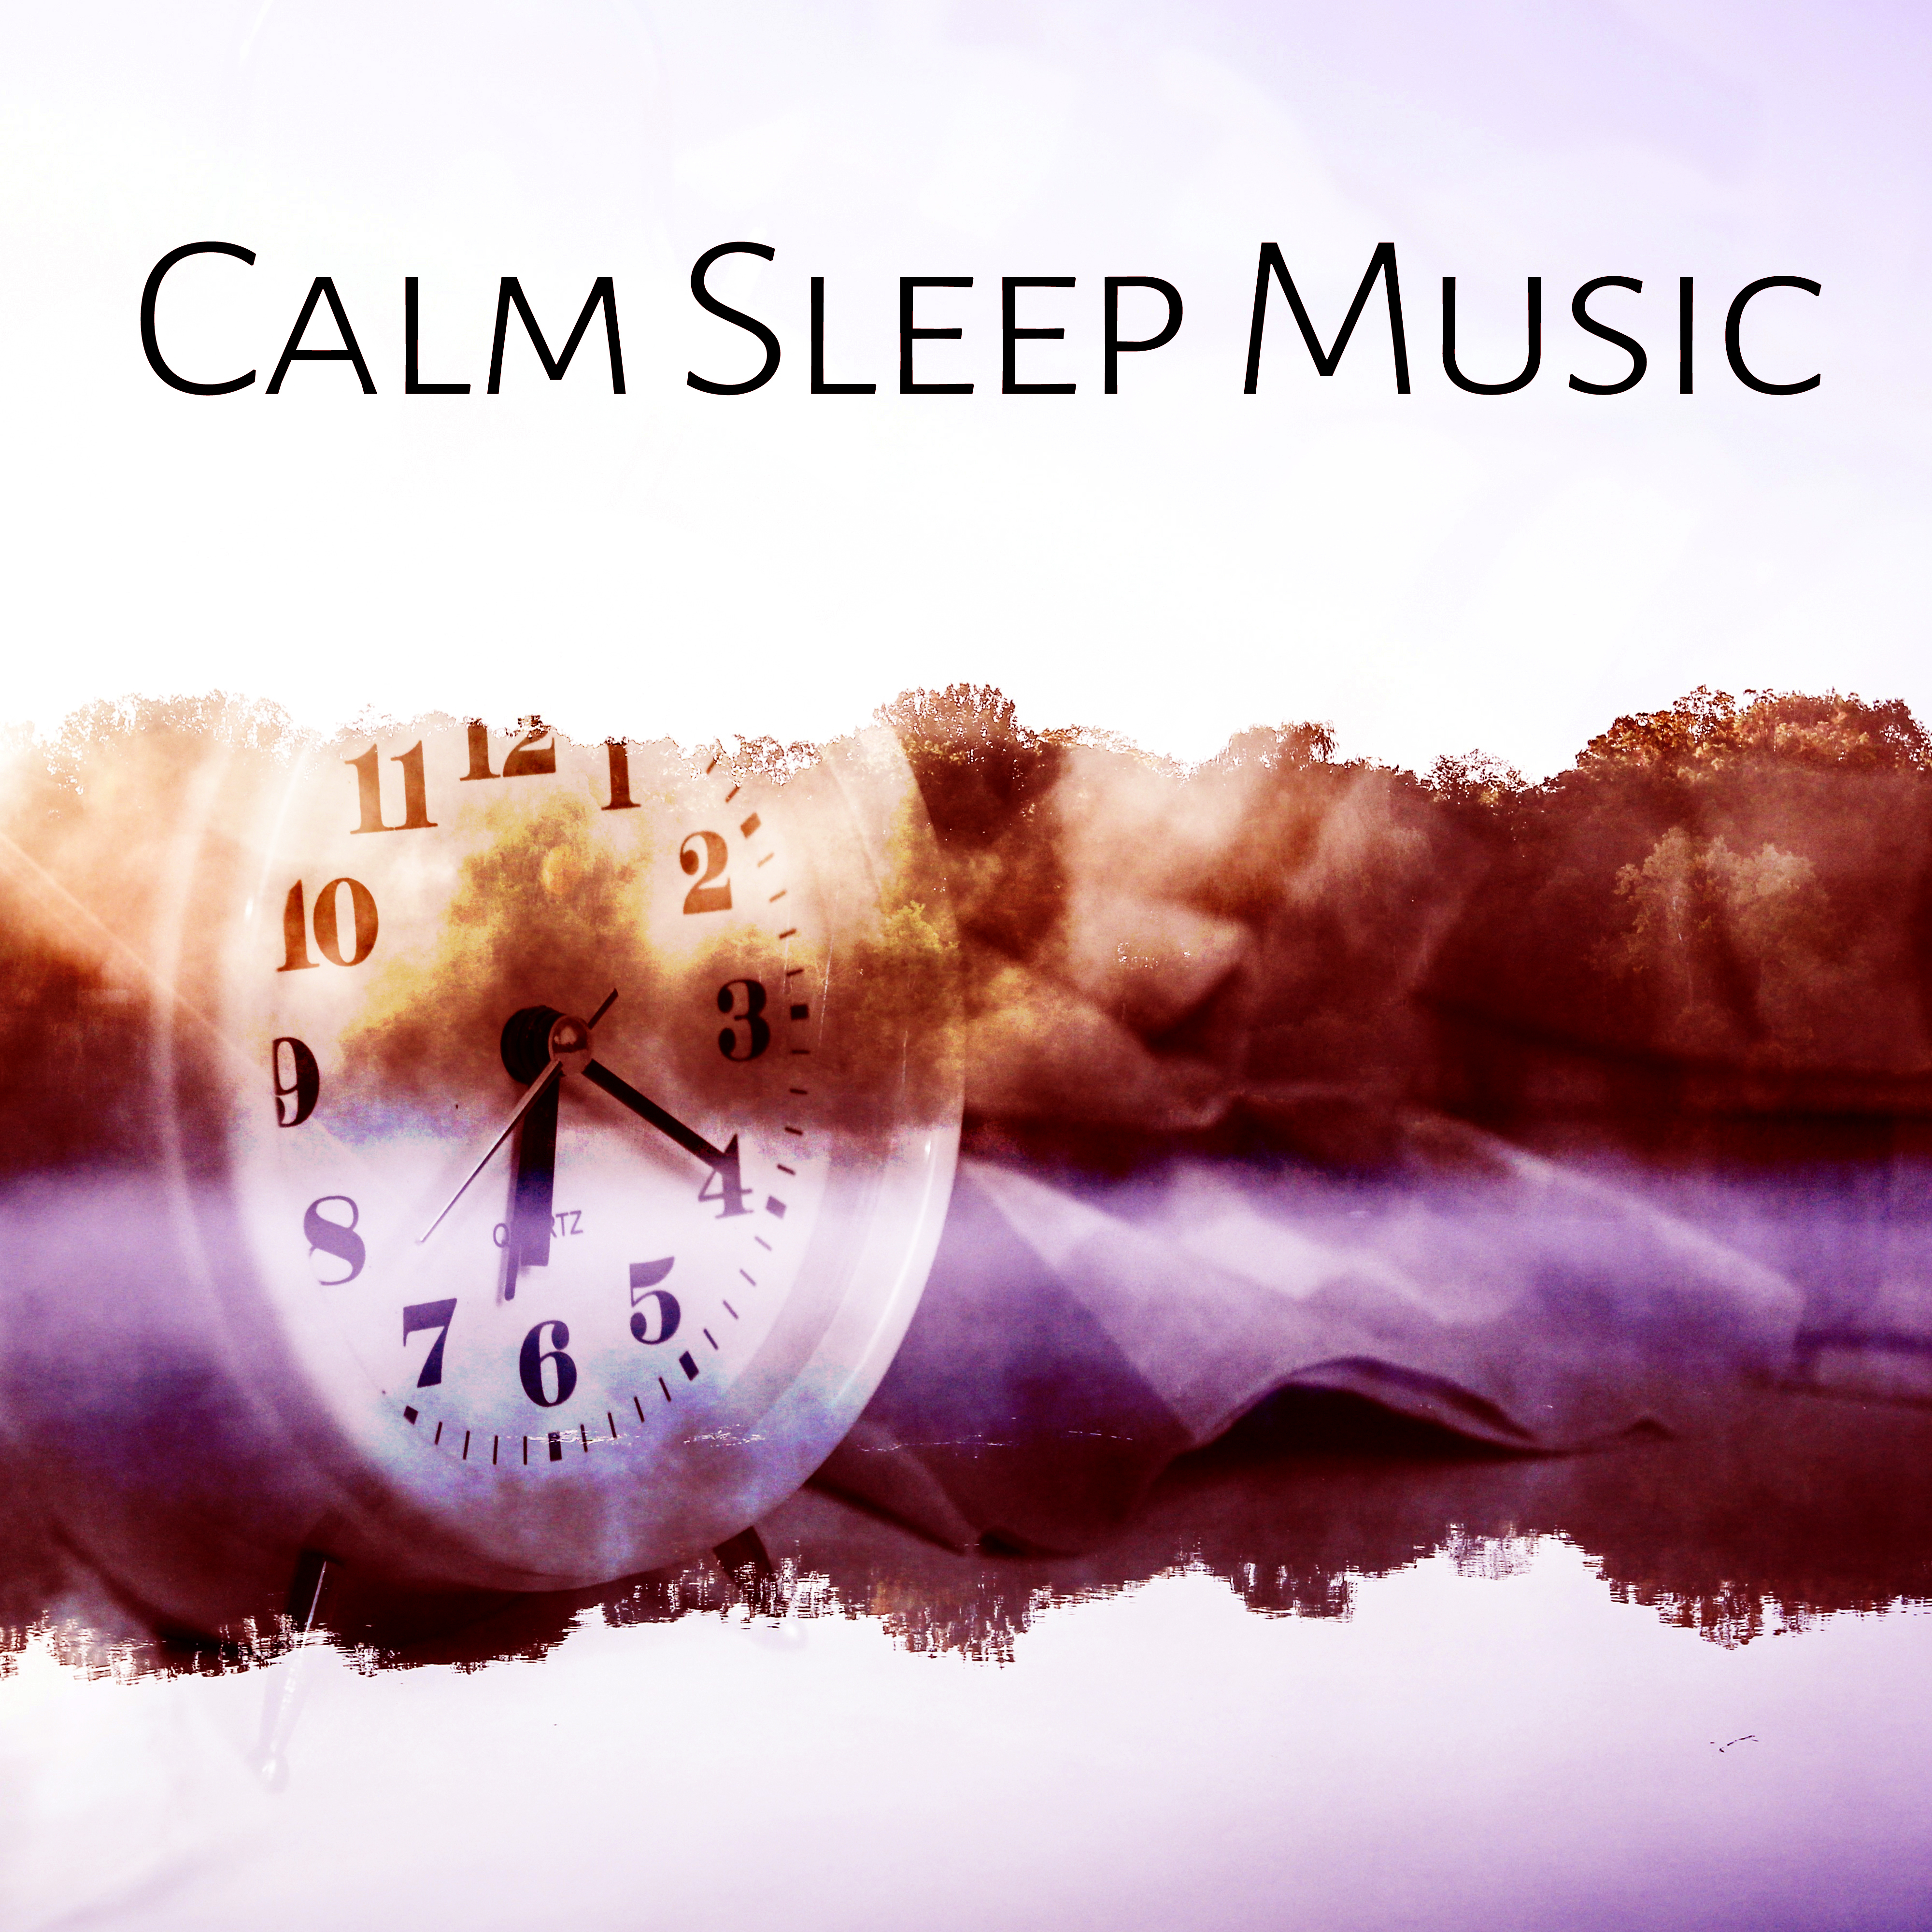 Calm Sleep Music – Music Before Sleep, Calmness, Peaceful Music, Deep Sleep, Nature Recovery